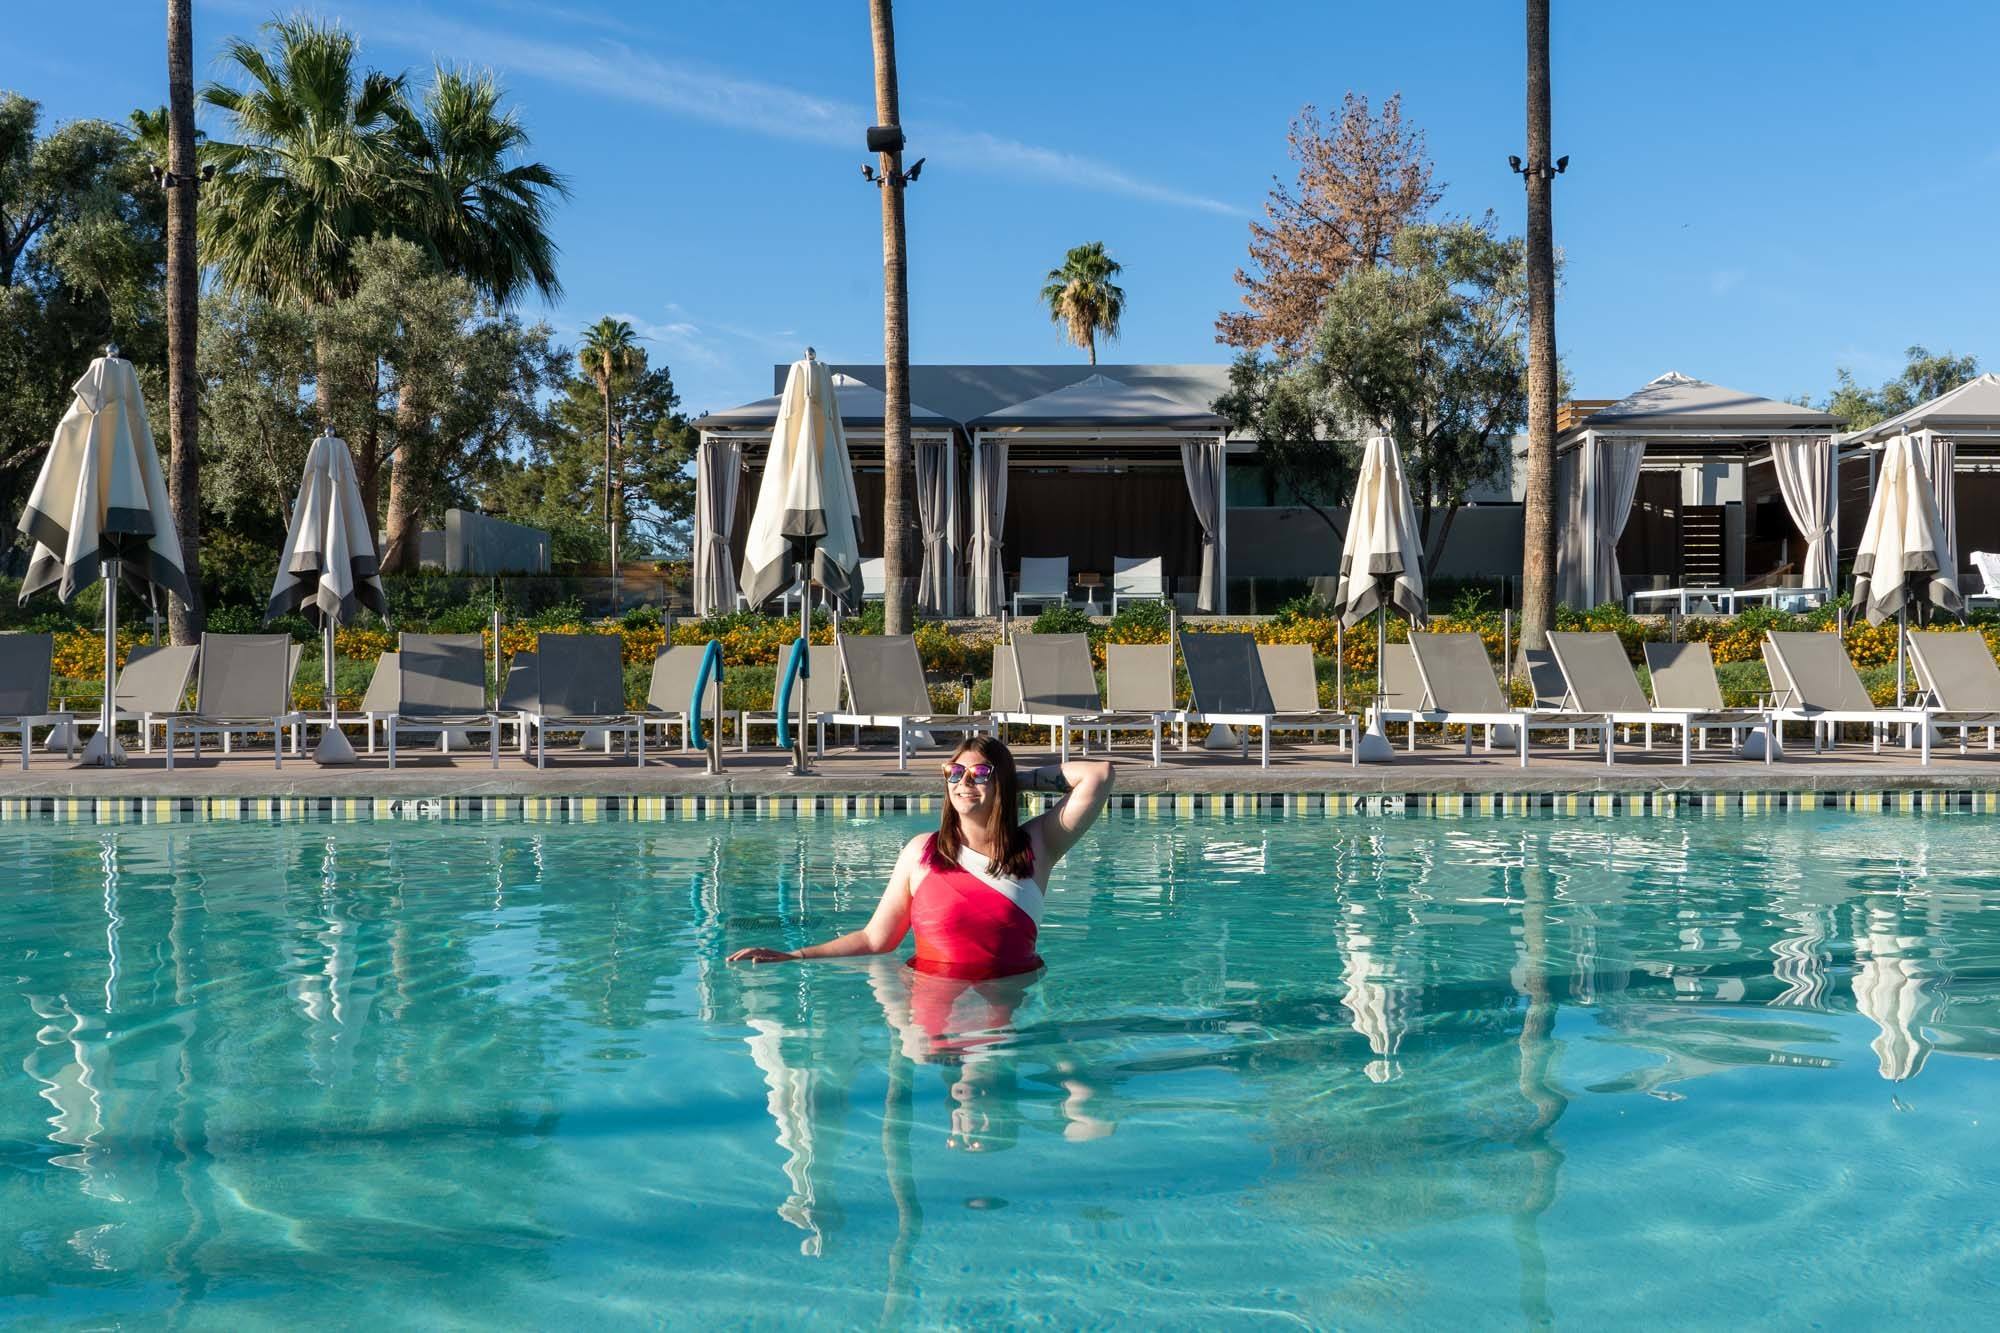 Andaz Scottsdale pool